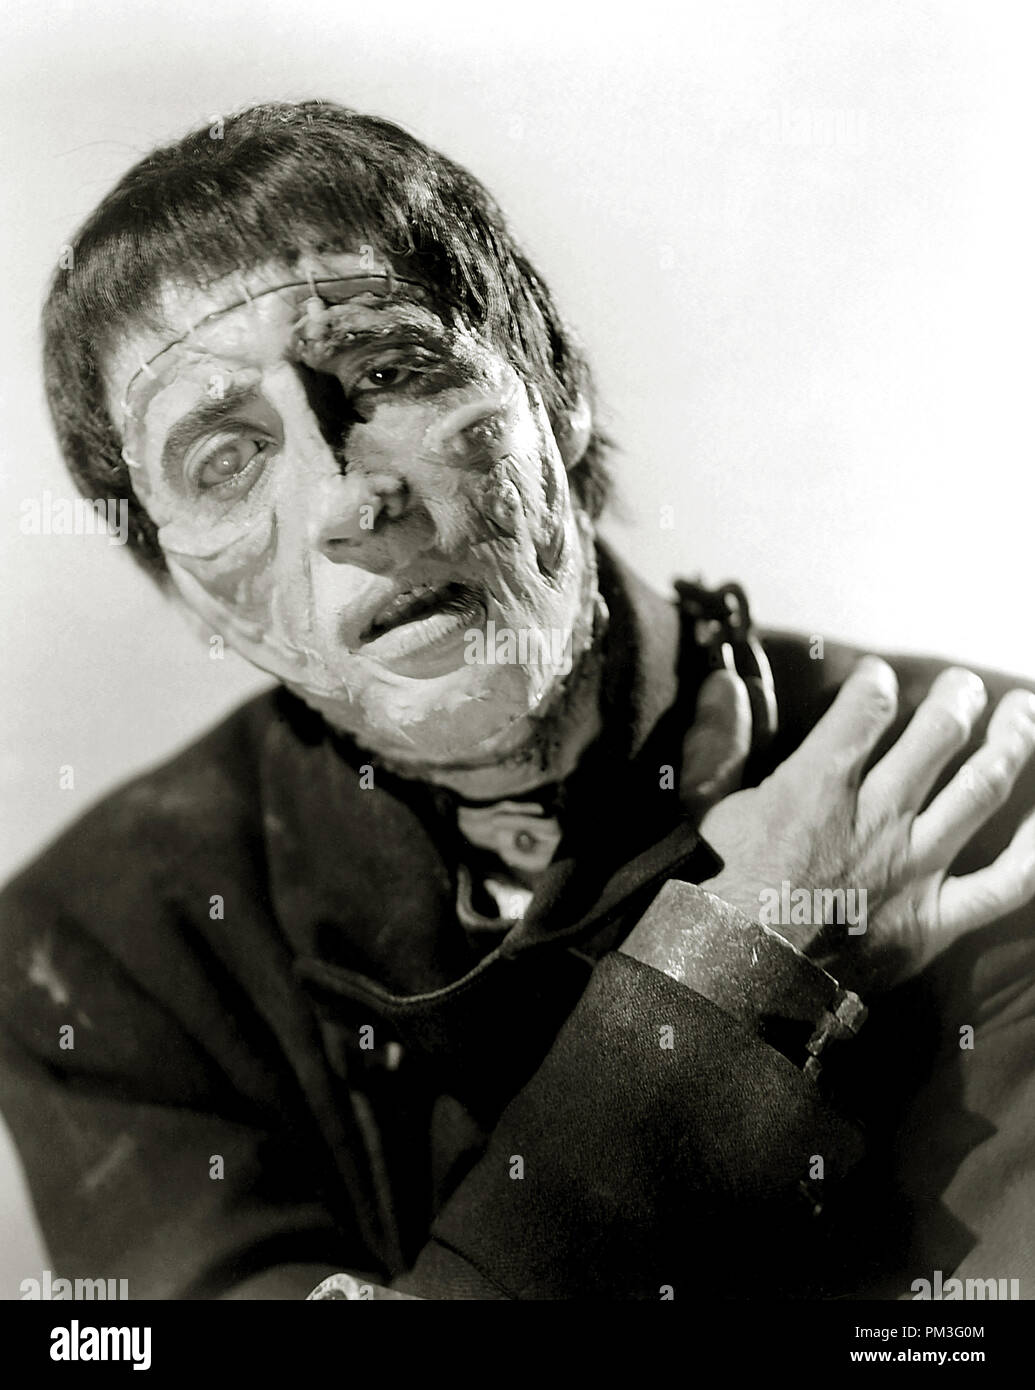 Christopher Lee, "The Curse of Frankenstein" 1957 Hammer Filme Datei Referenz # 30732 303 Stockfoto